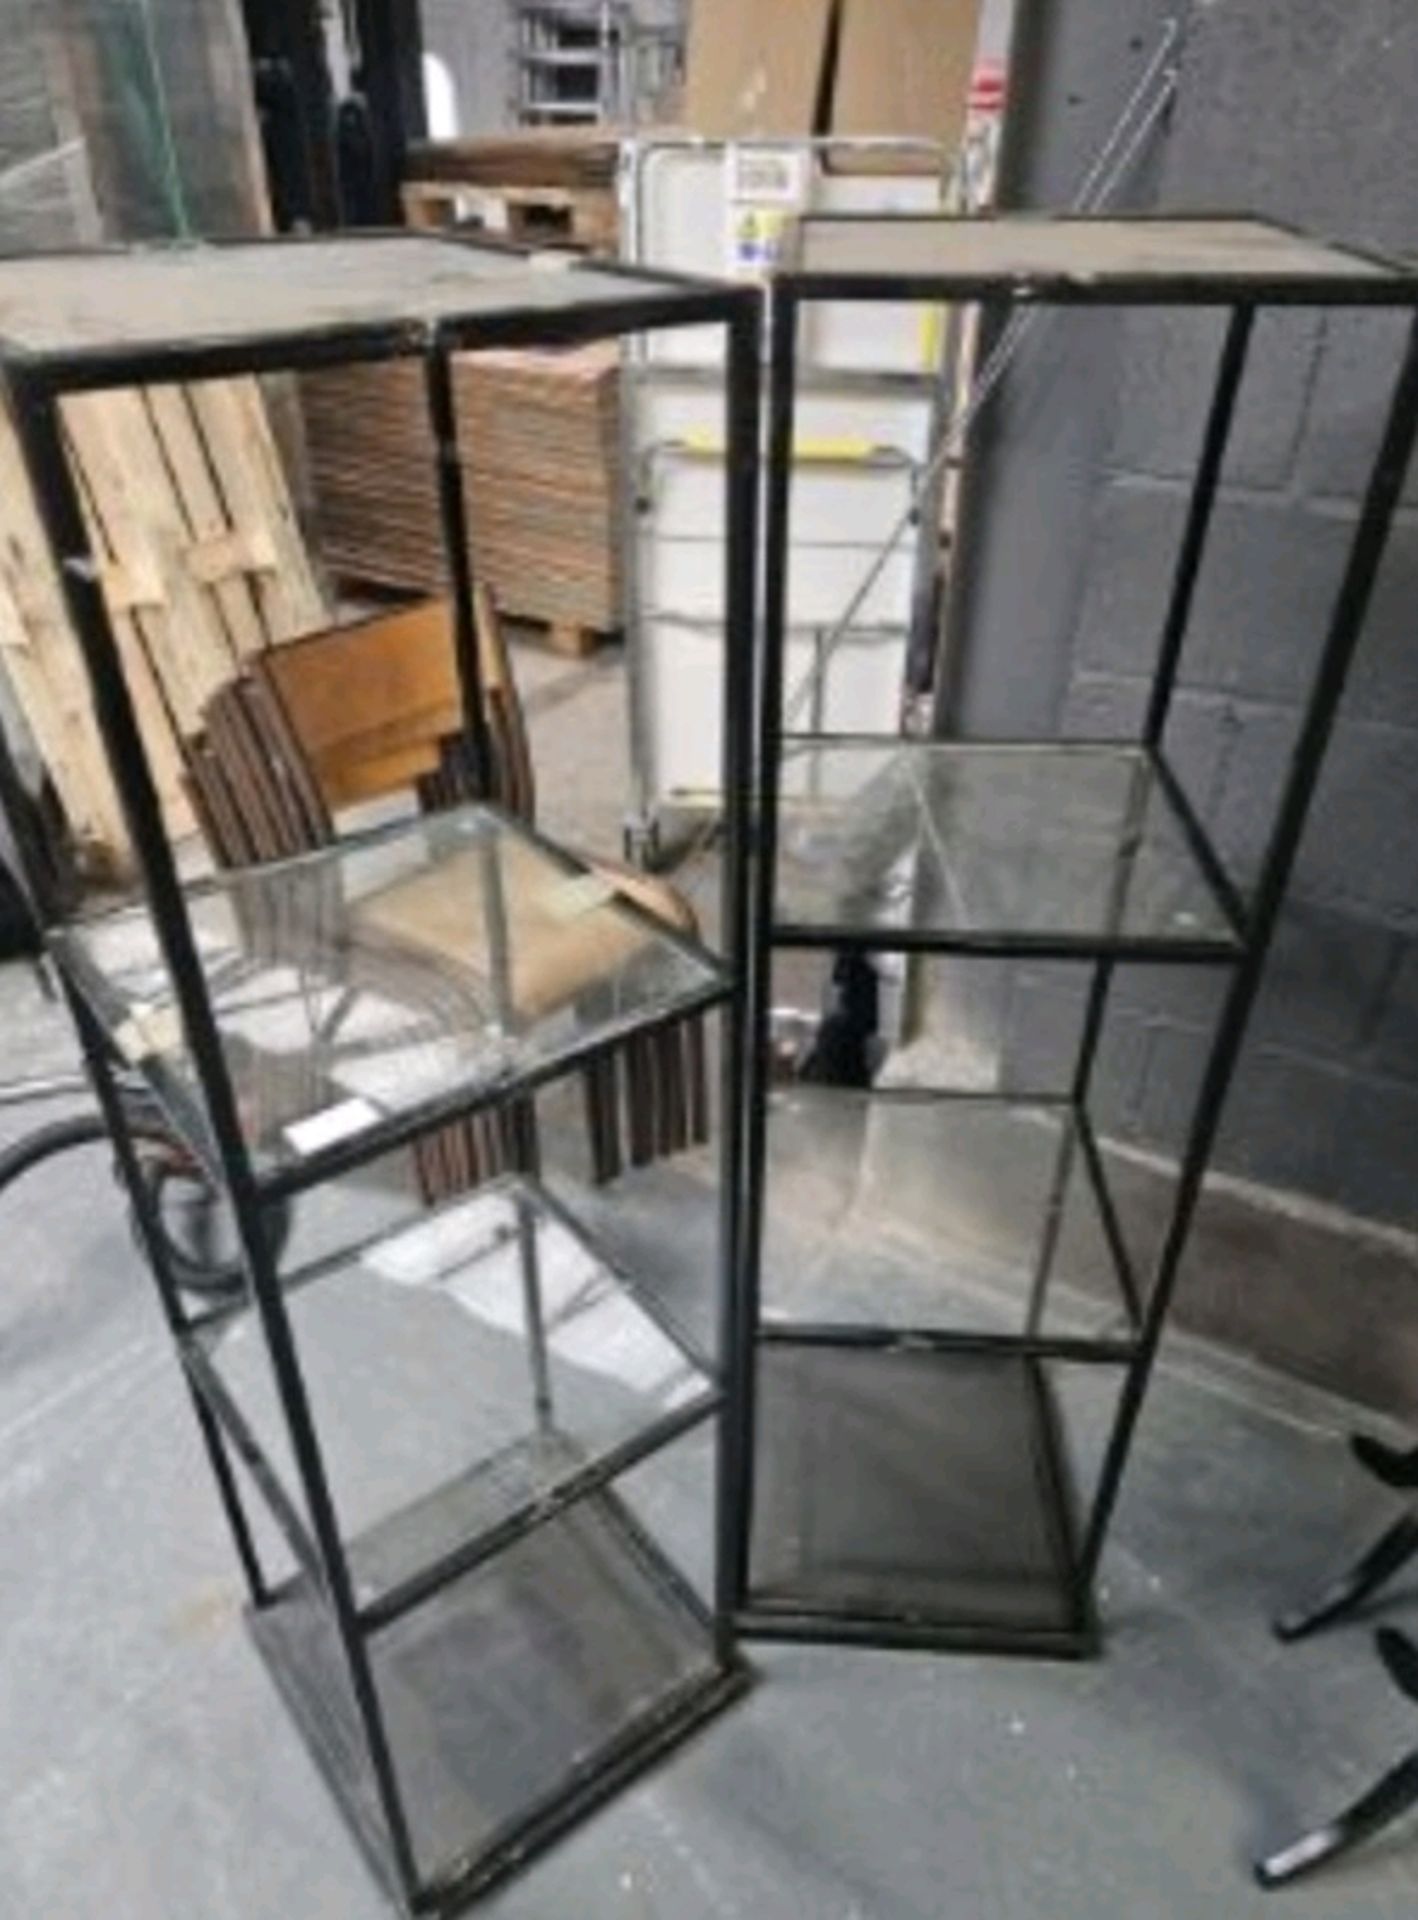 Metal & Glass Display Stand x 2